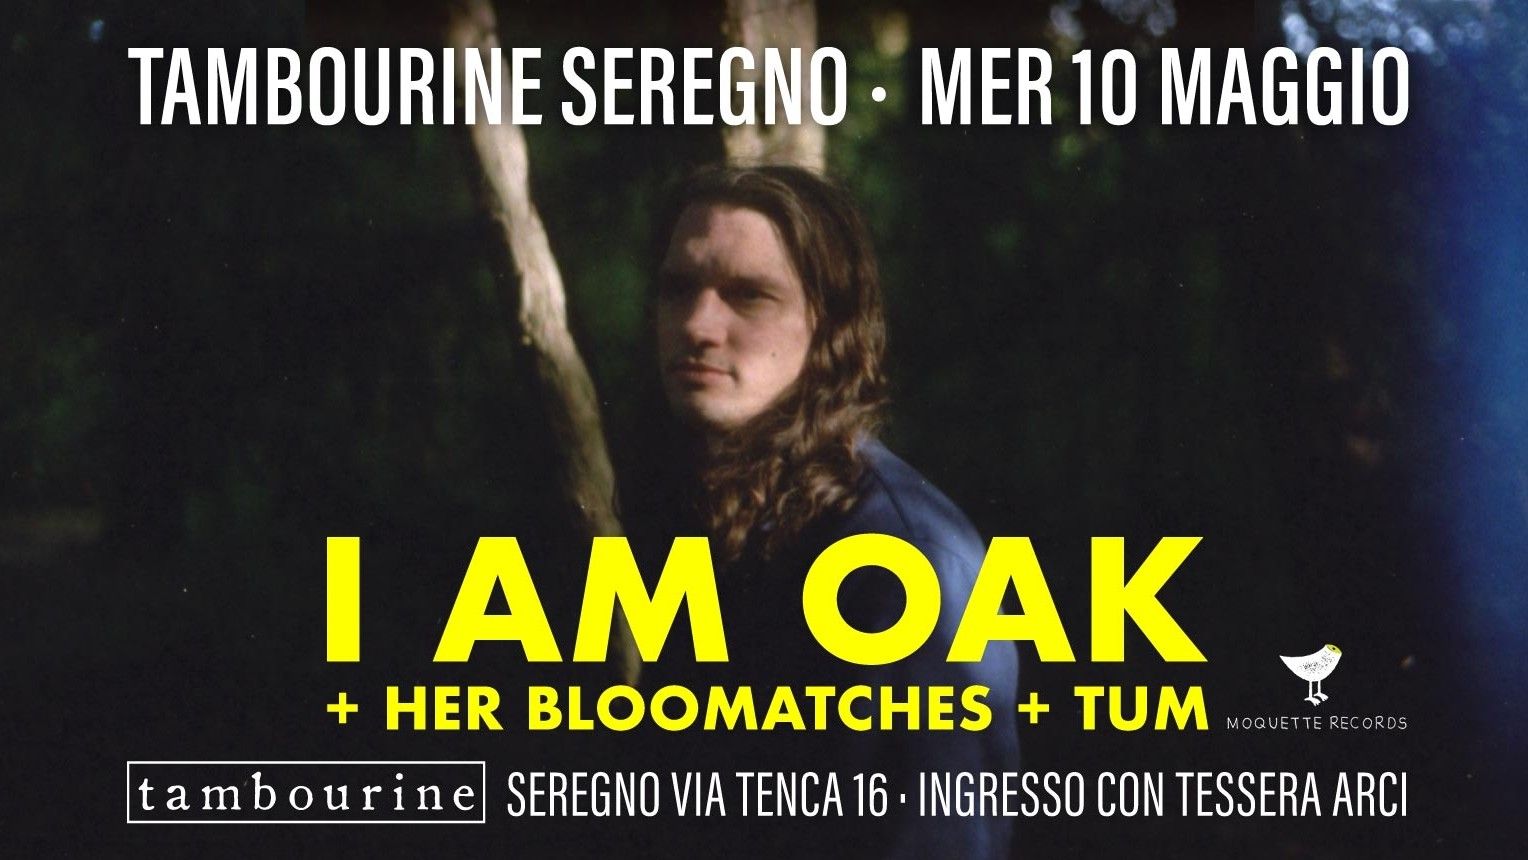 I Am Oak+ Her Bloomatches + Tum